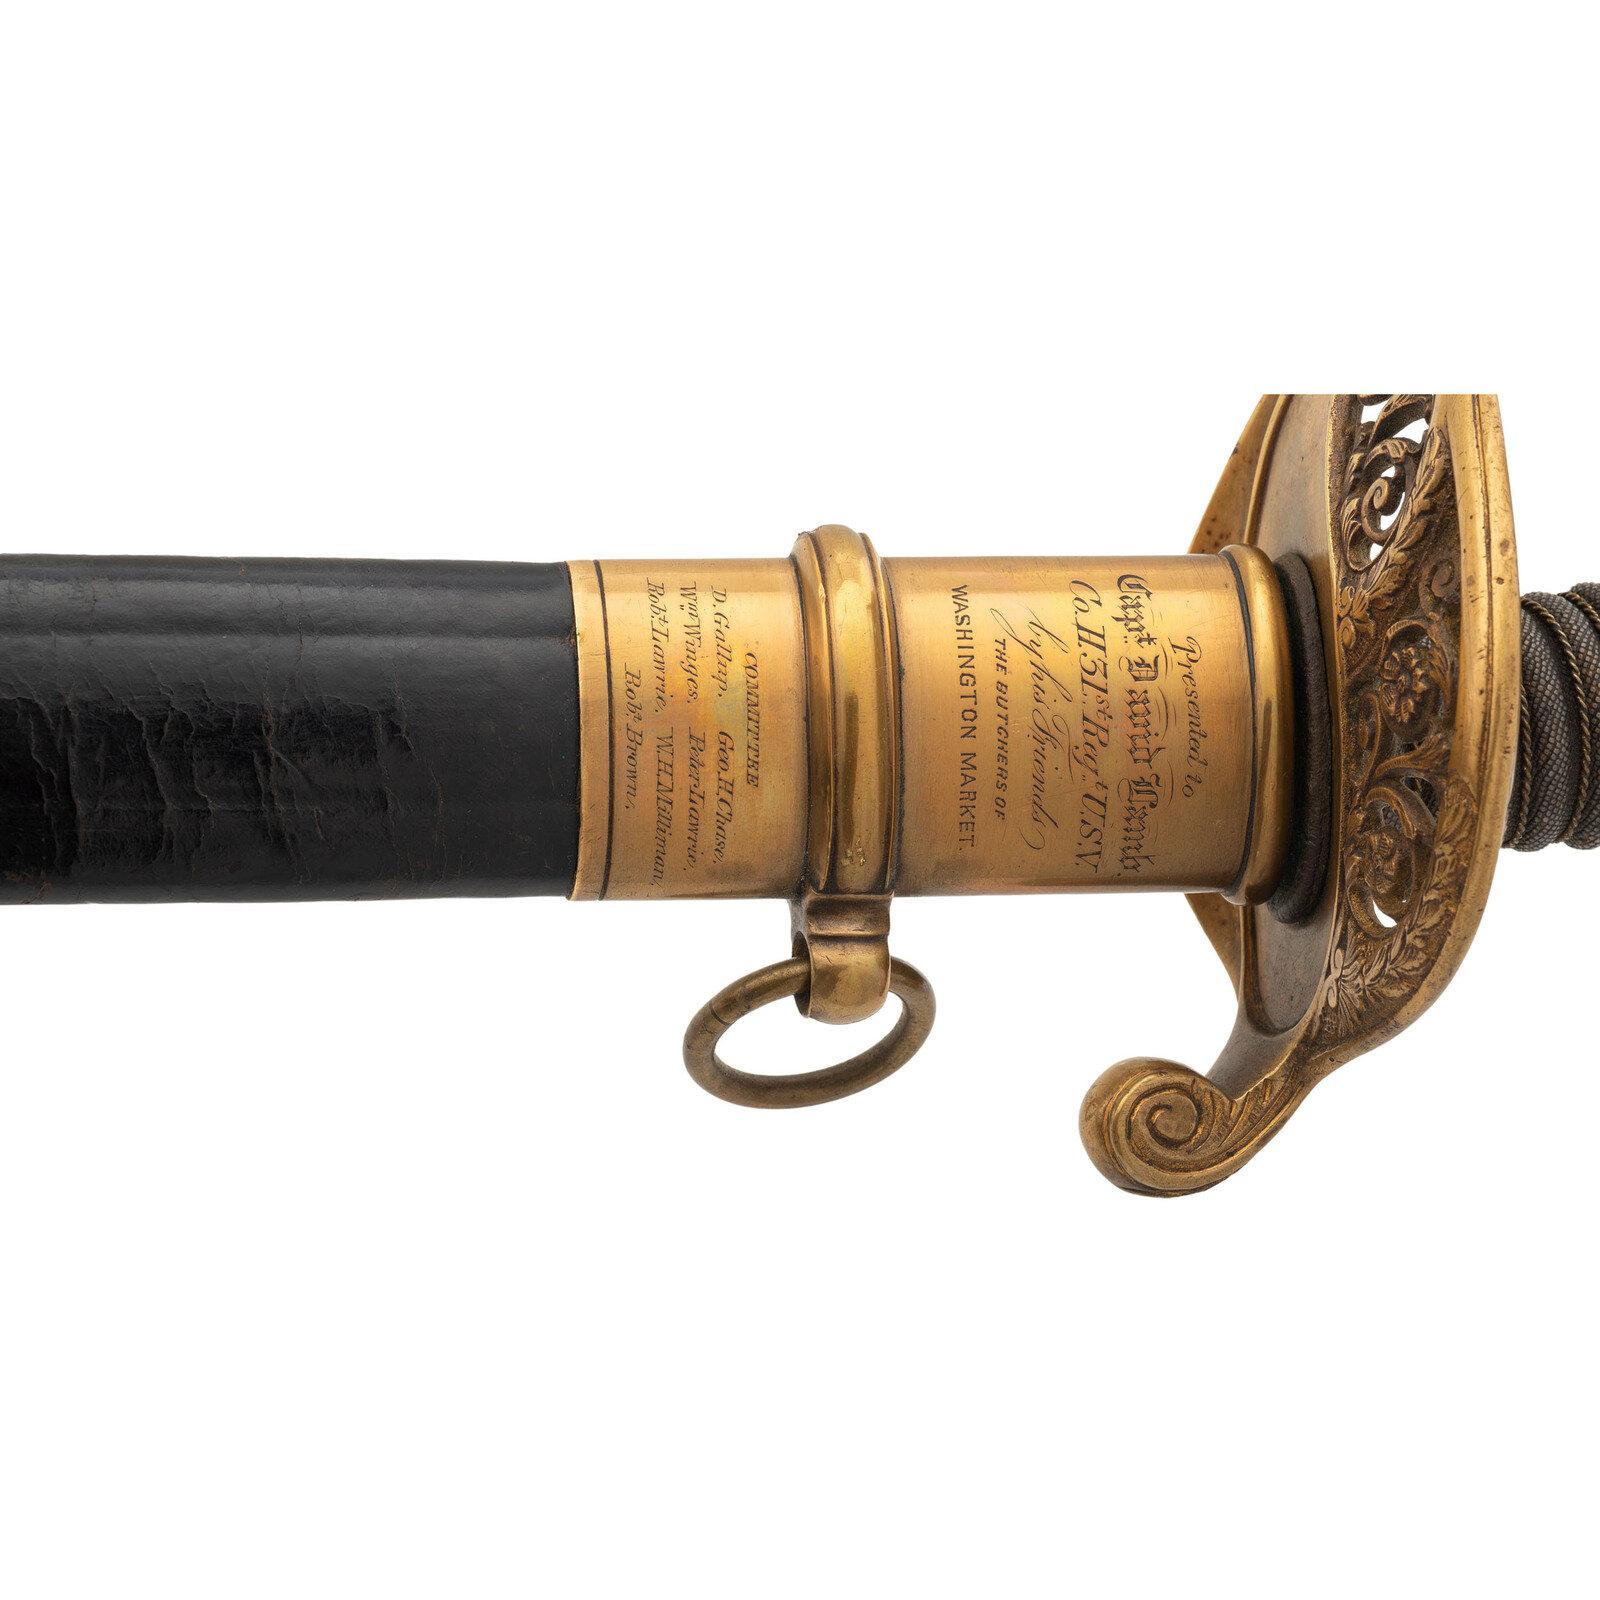 Ames Model 1850 Foot Officers Sword Presented to Capt. David Lamb - 31st New York Volunteers